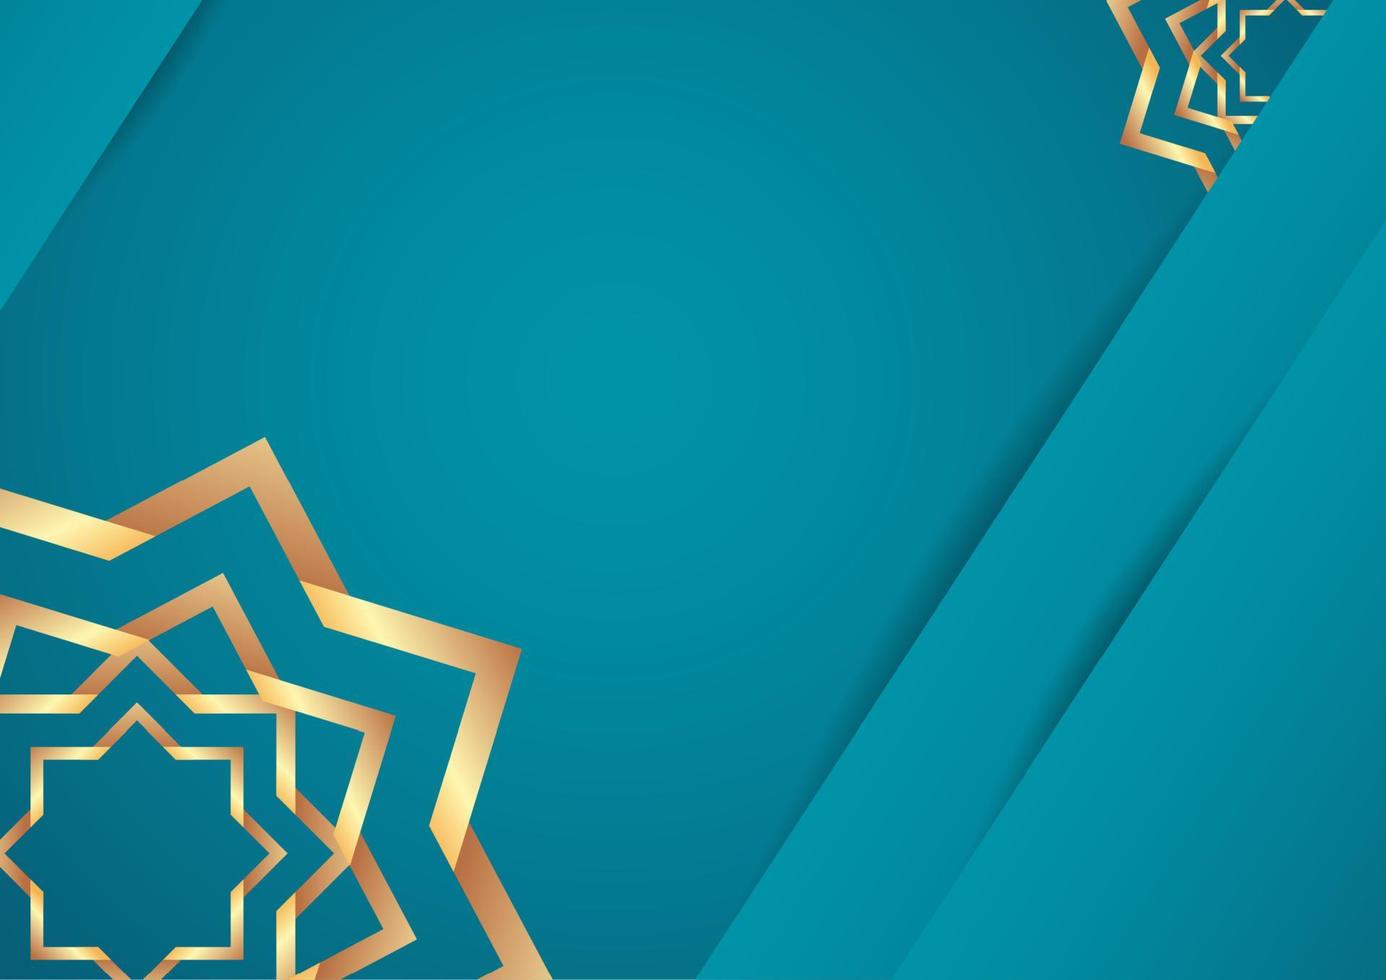 Eid Mubarak Hintergrund Design vektor